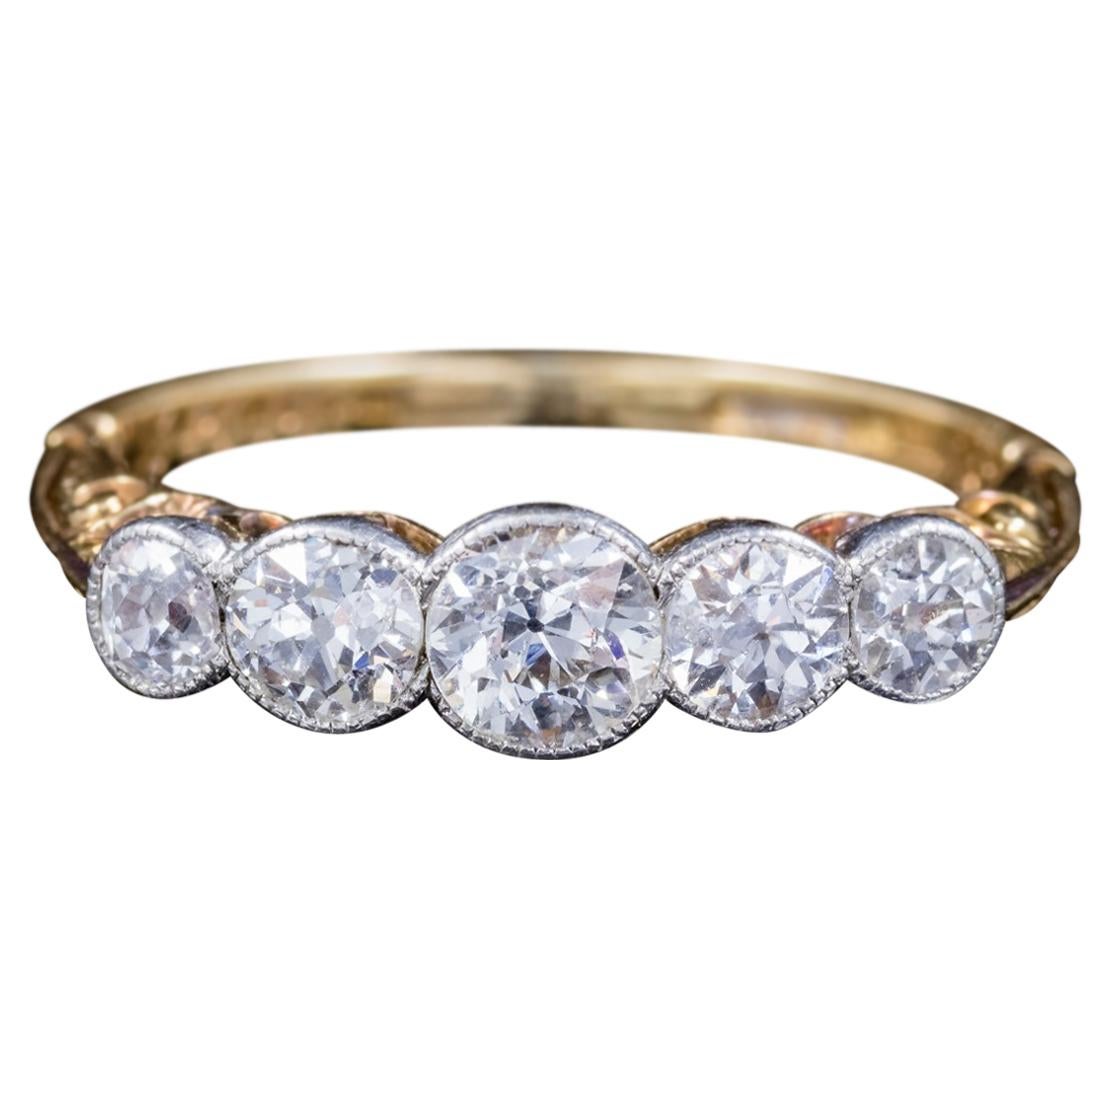 Antique Edwardian 1 Carat Diamond 18 Carat Gold Dated 1910 Five-Stone Ring